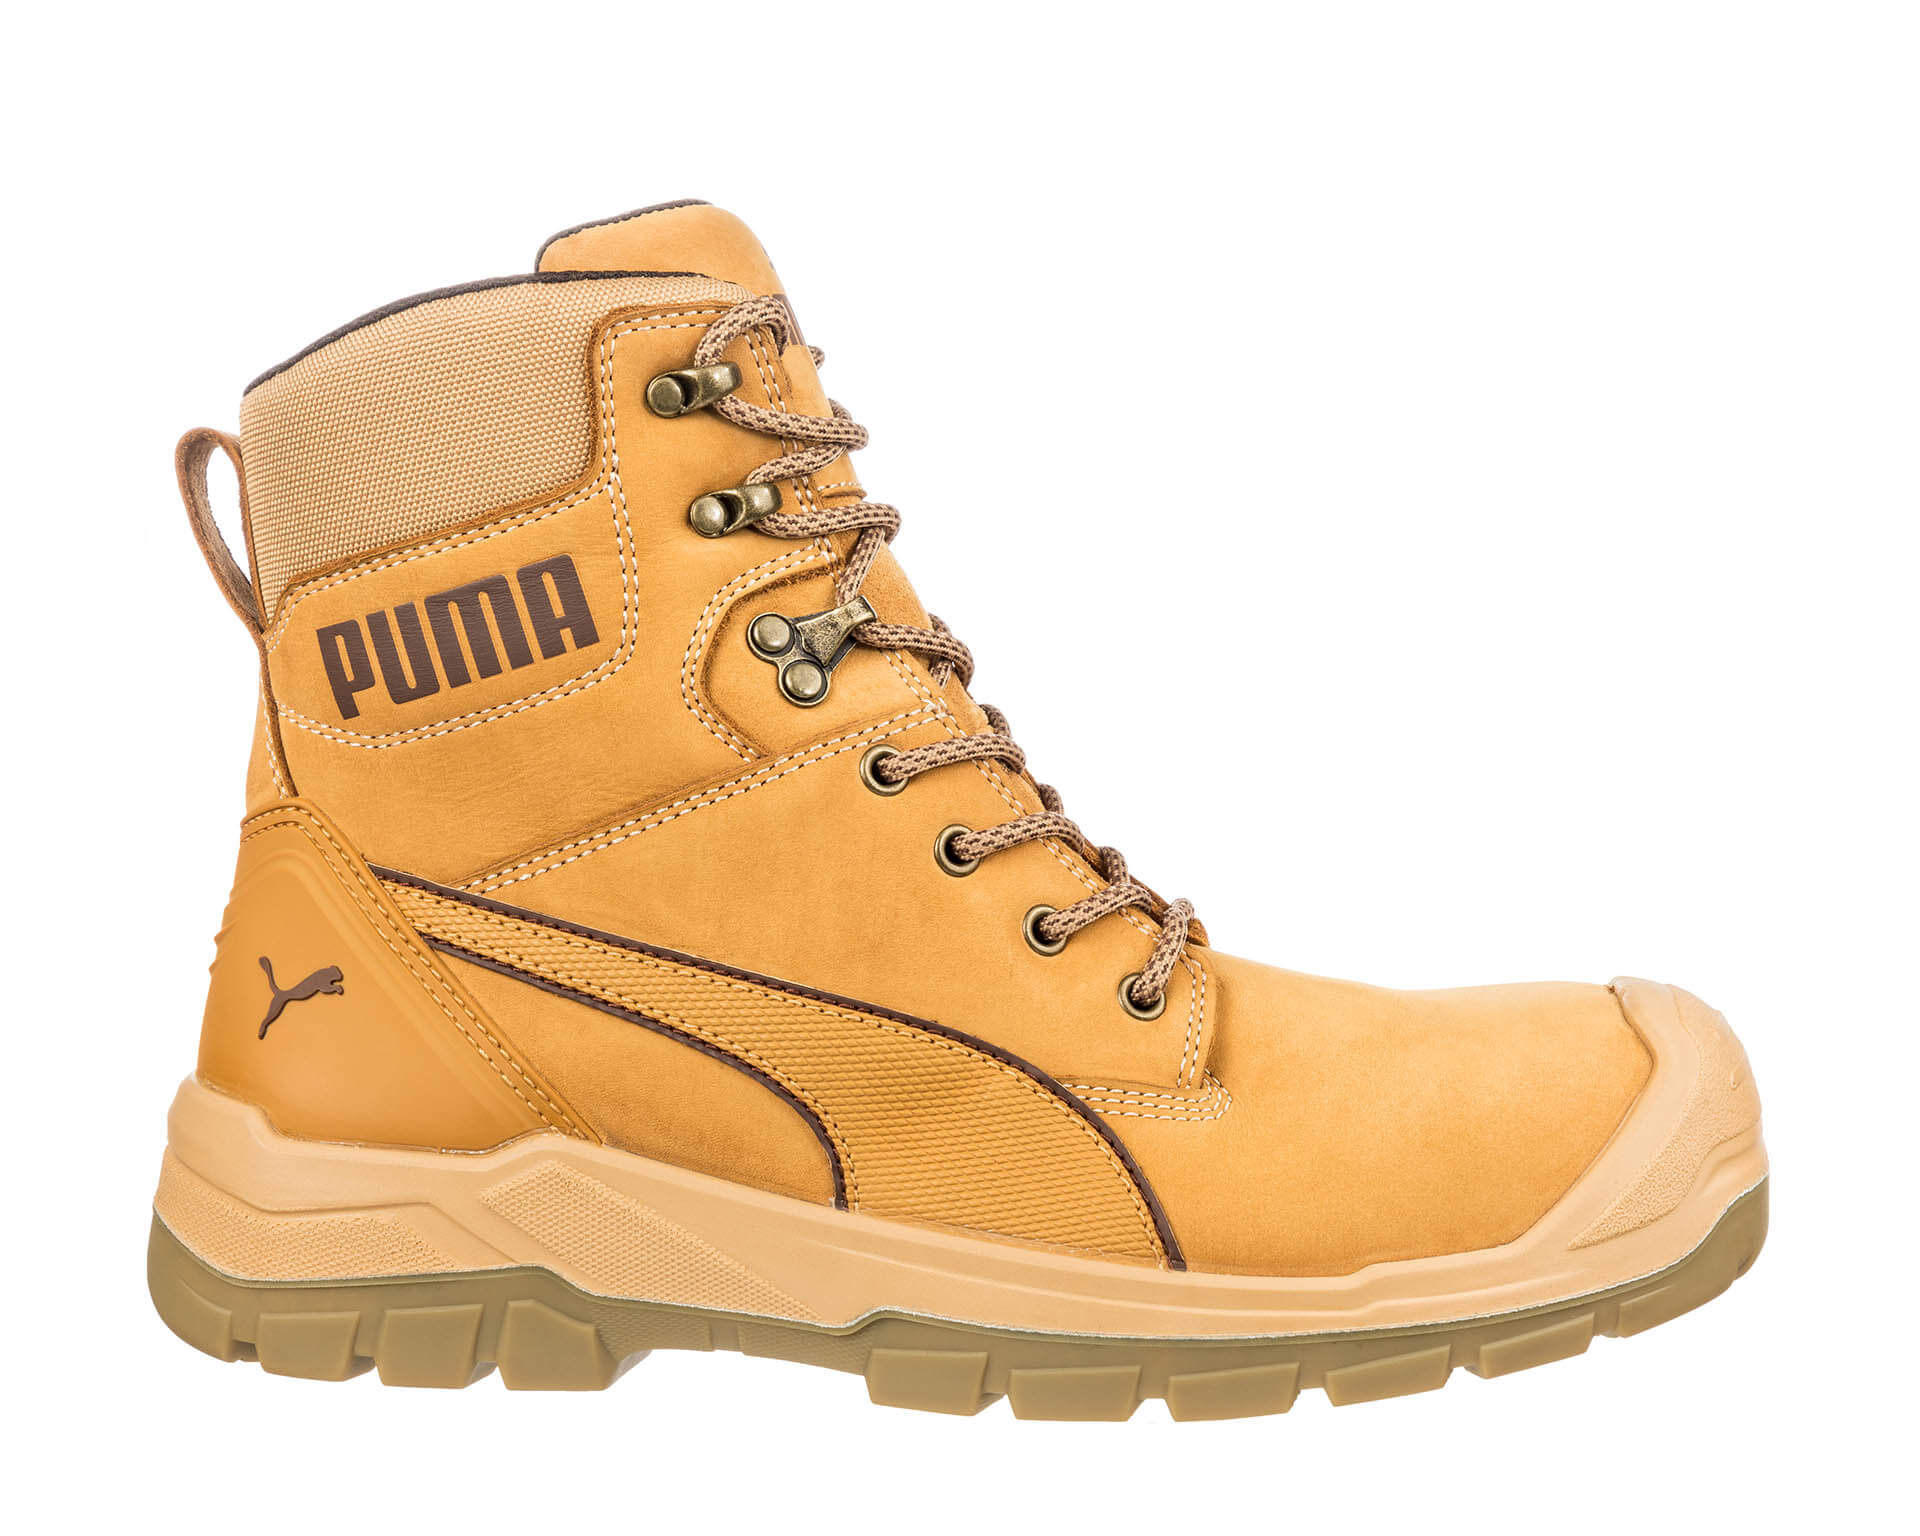 PUMA SAFETY CONQUEST Safety ASTM EH Puma USA CTX WHEAT HIGH WP 